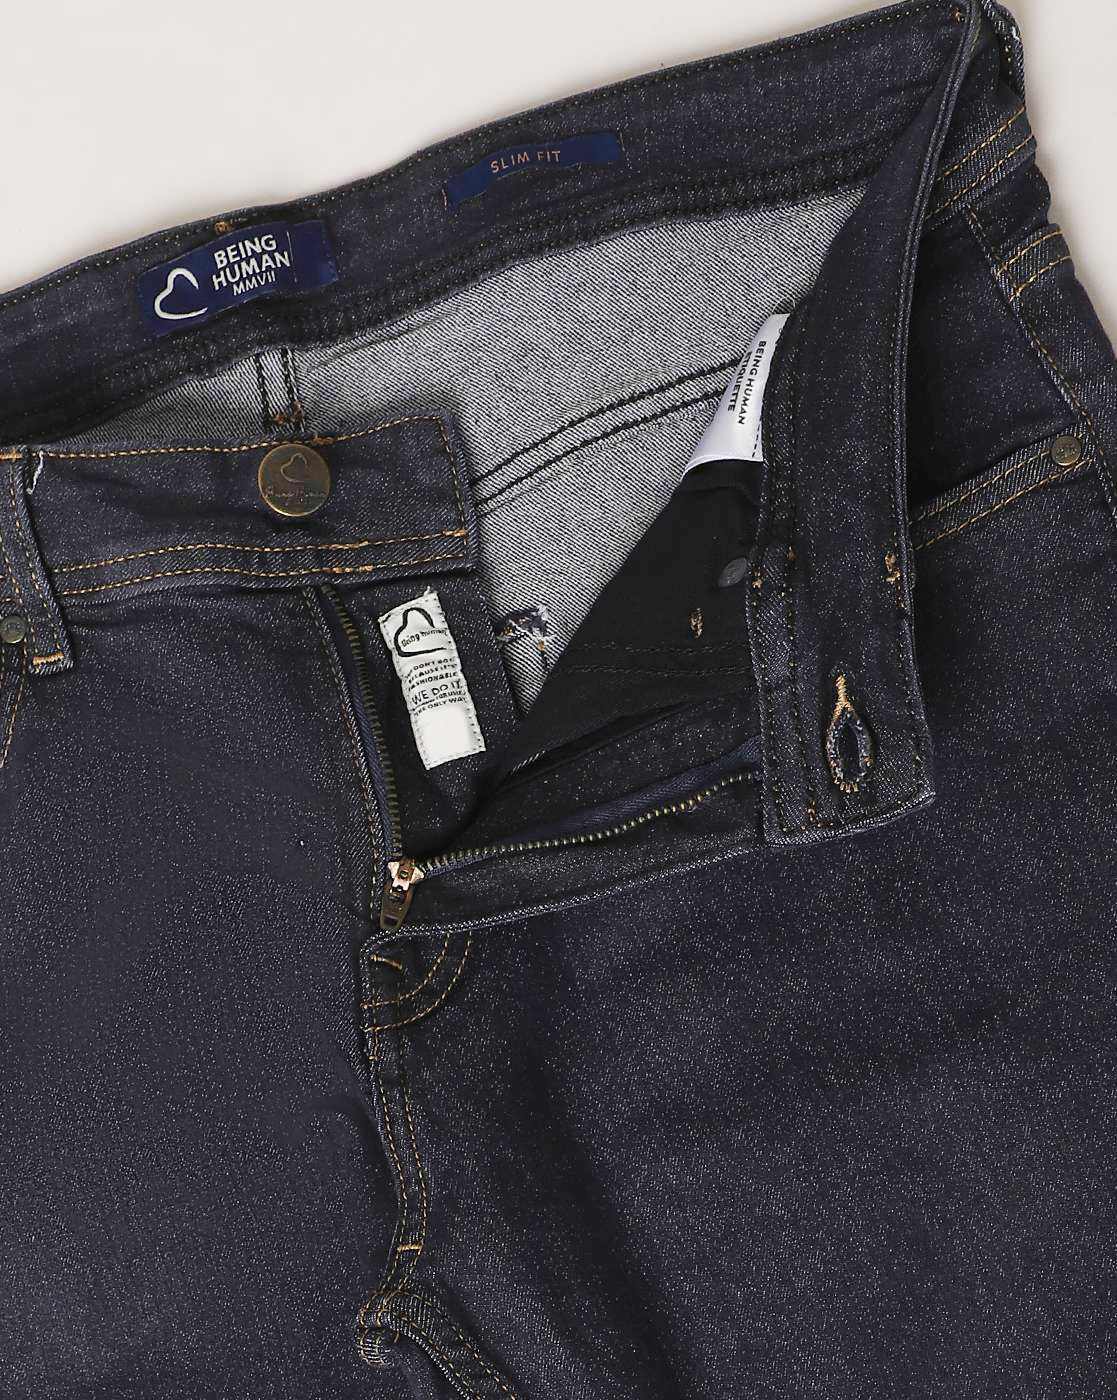 NWT MSFTS REP Blue & Multi Denim Straight Jeans Size 31 $255 | eBay